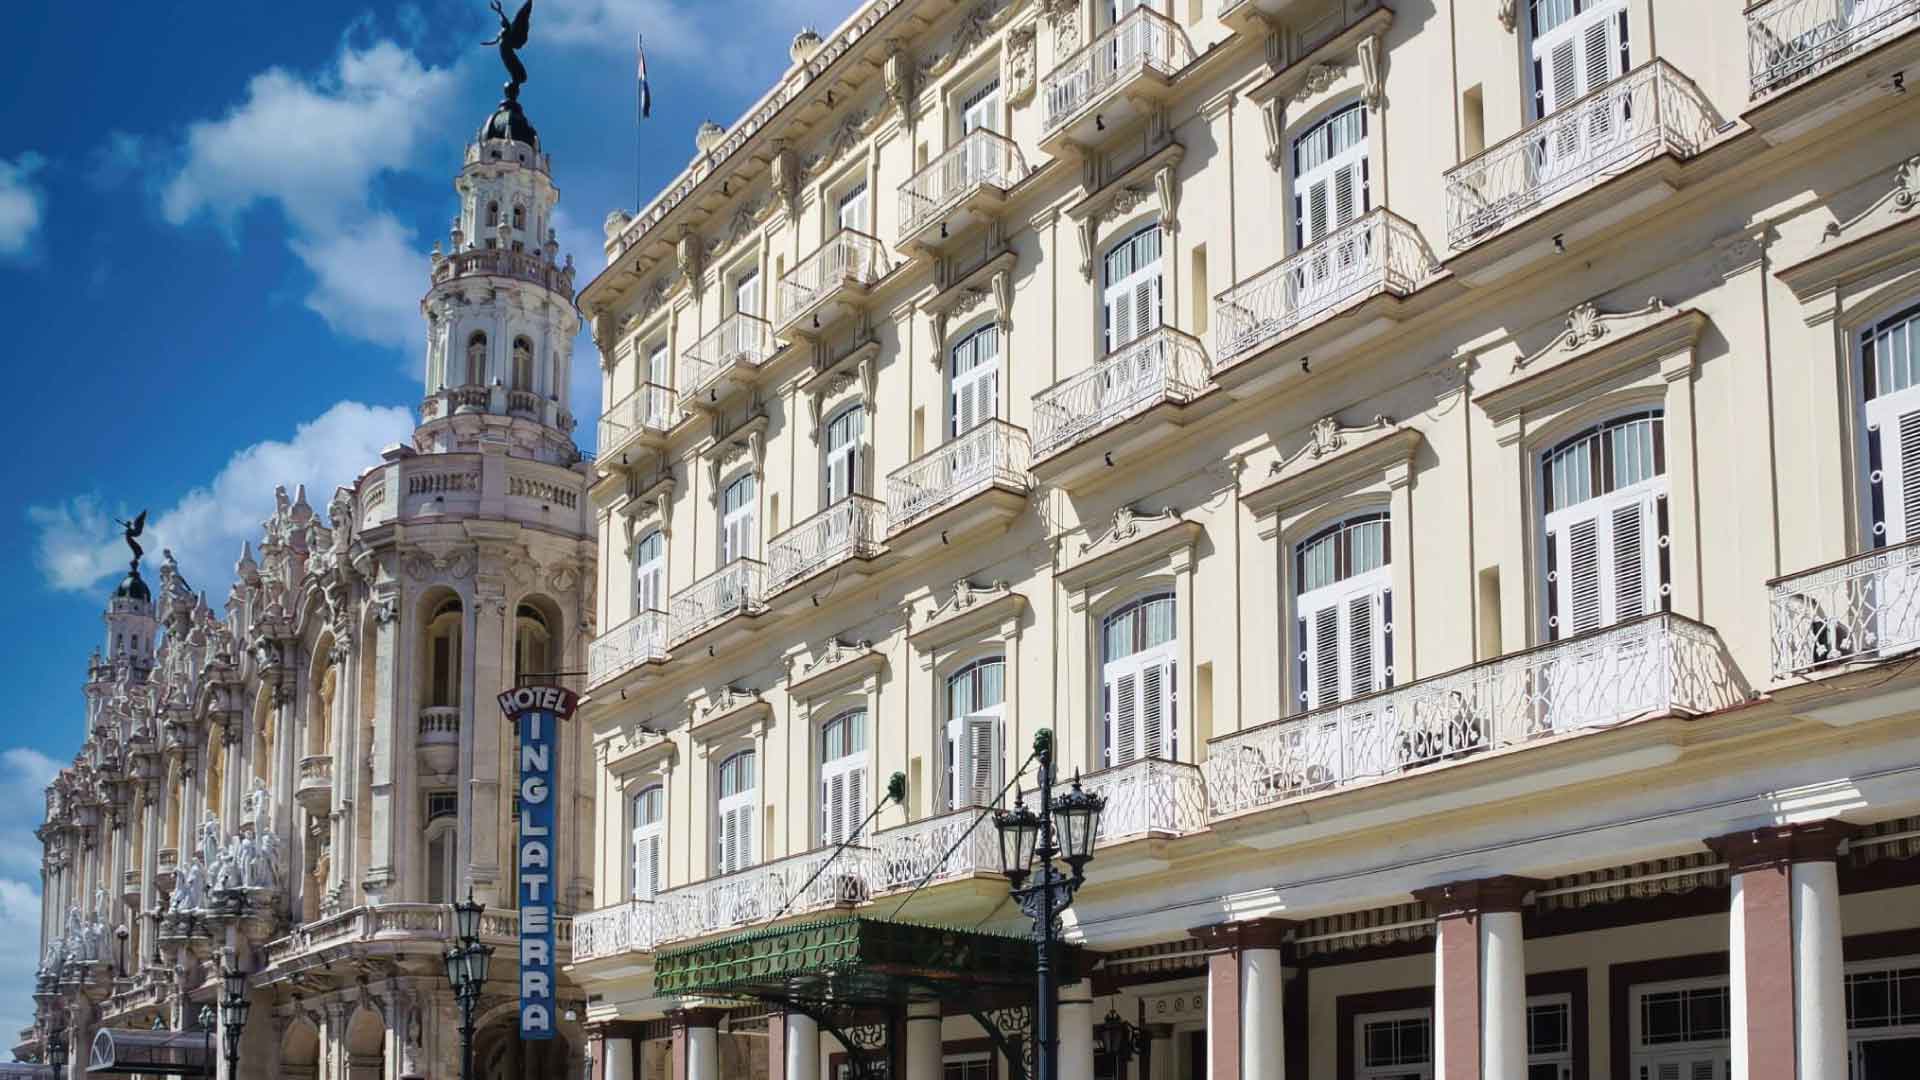 hotel Inglaterra La Habana